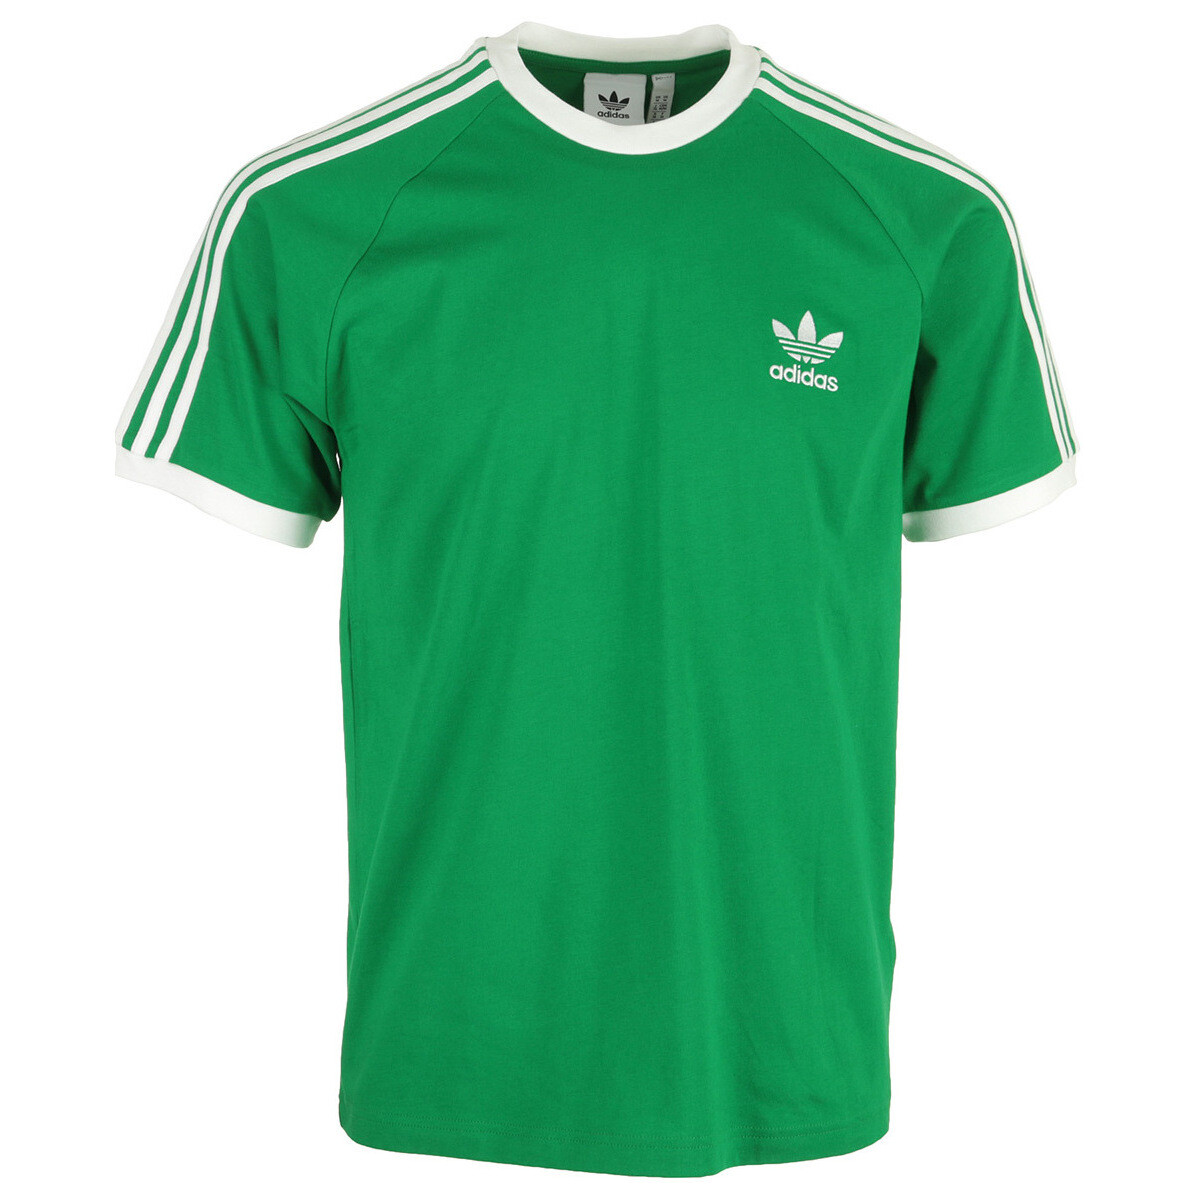 Vêtements Homme T-shirts manches courtes adidas Originals 3 Stripes Tee Shirt Vert